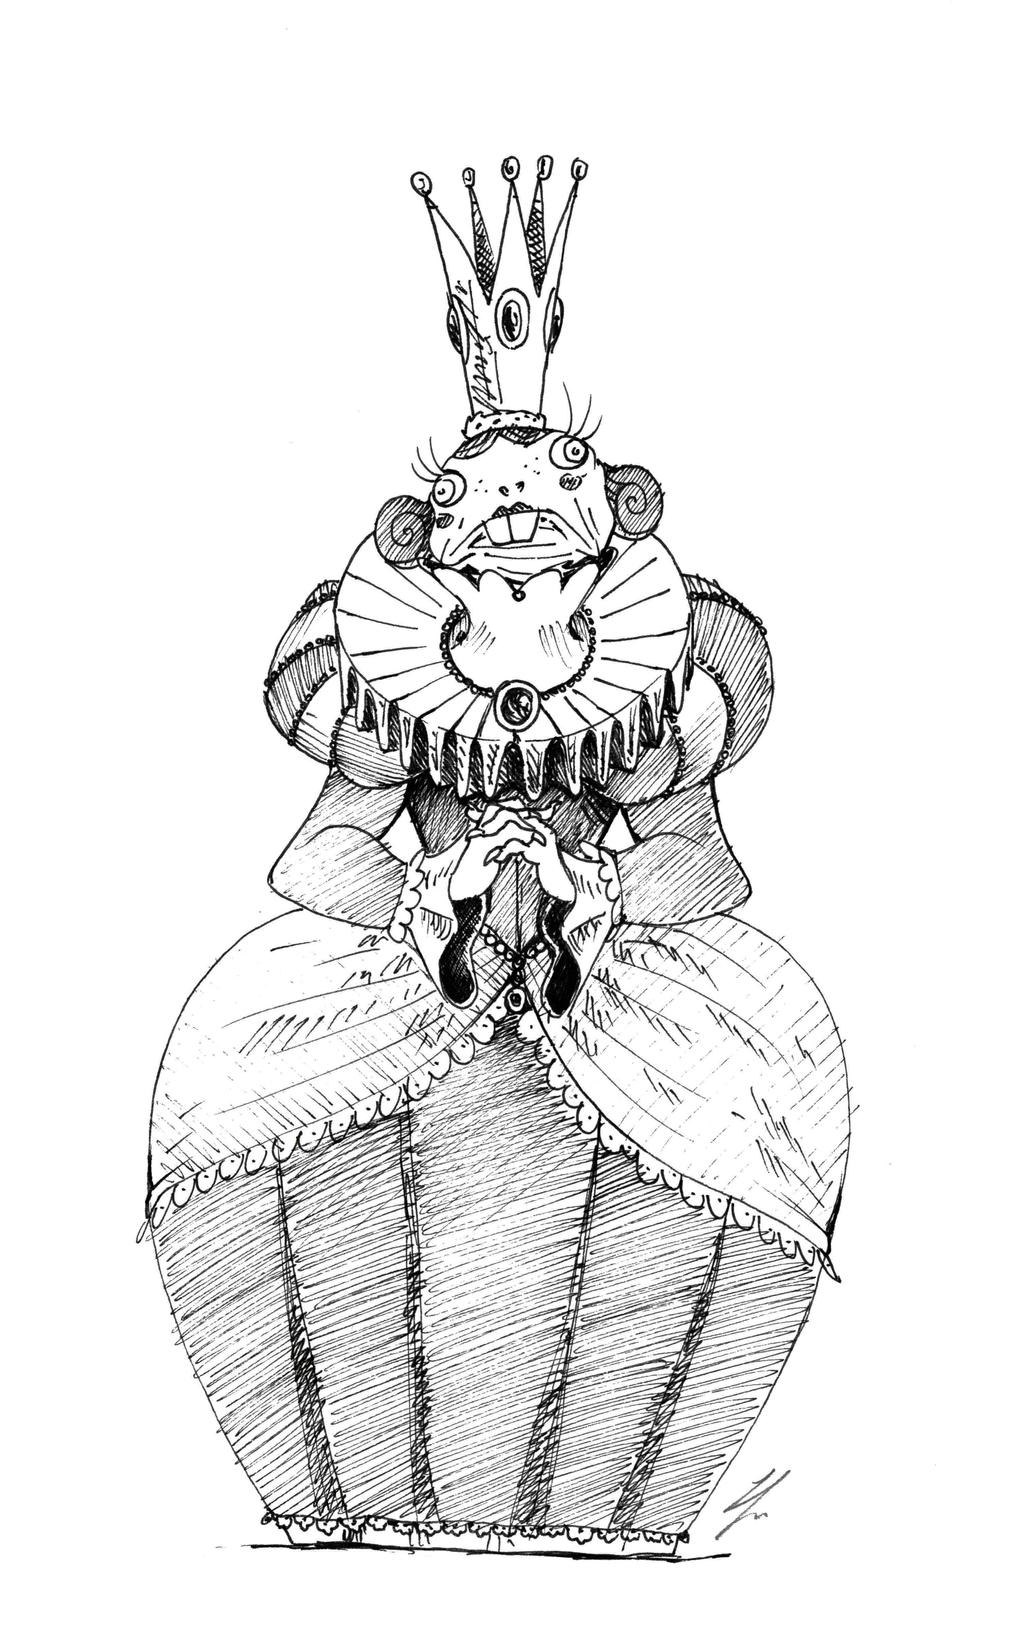 Clothilde, the Wicked Queen